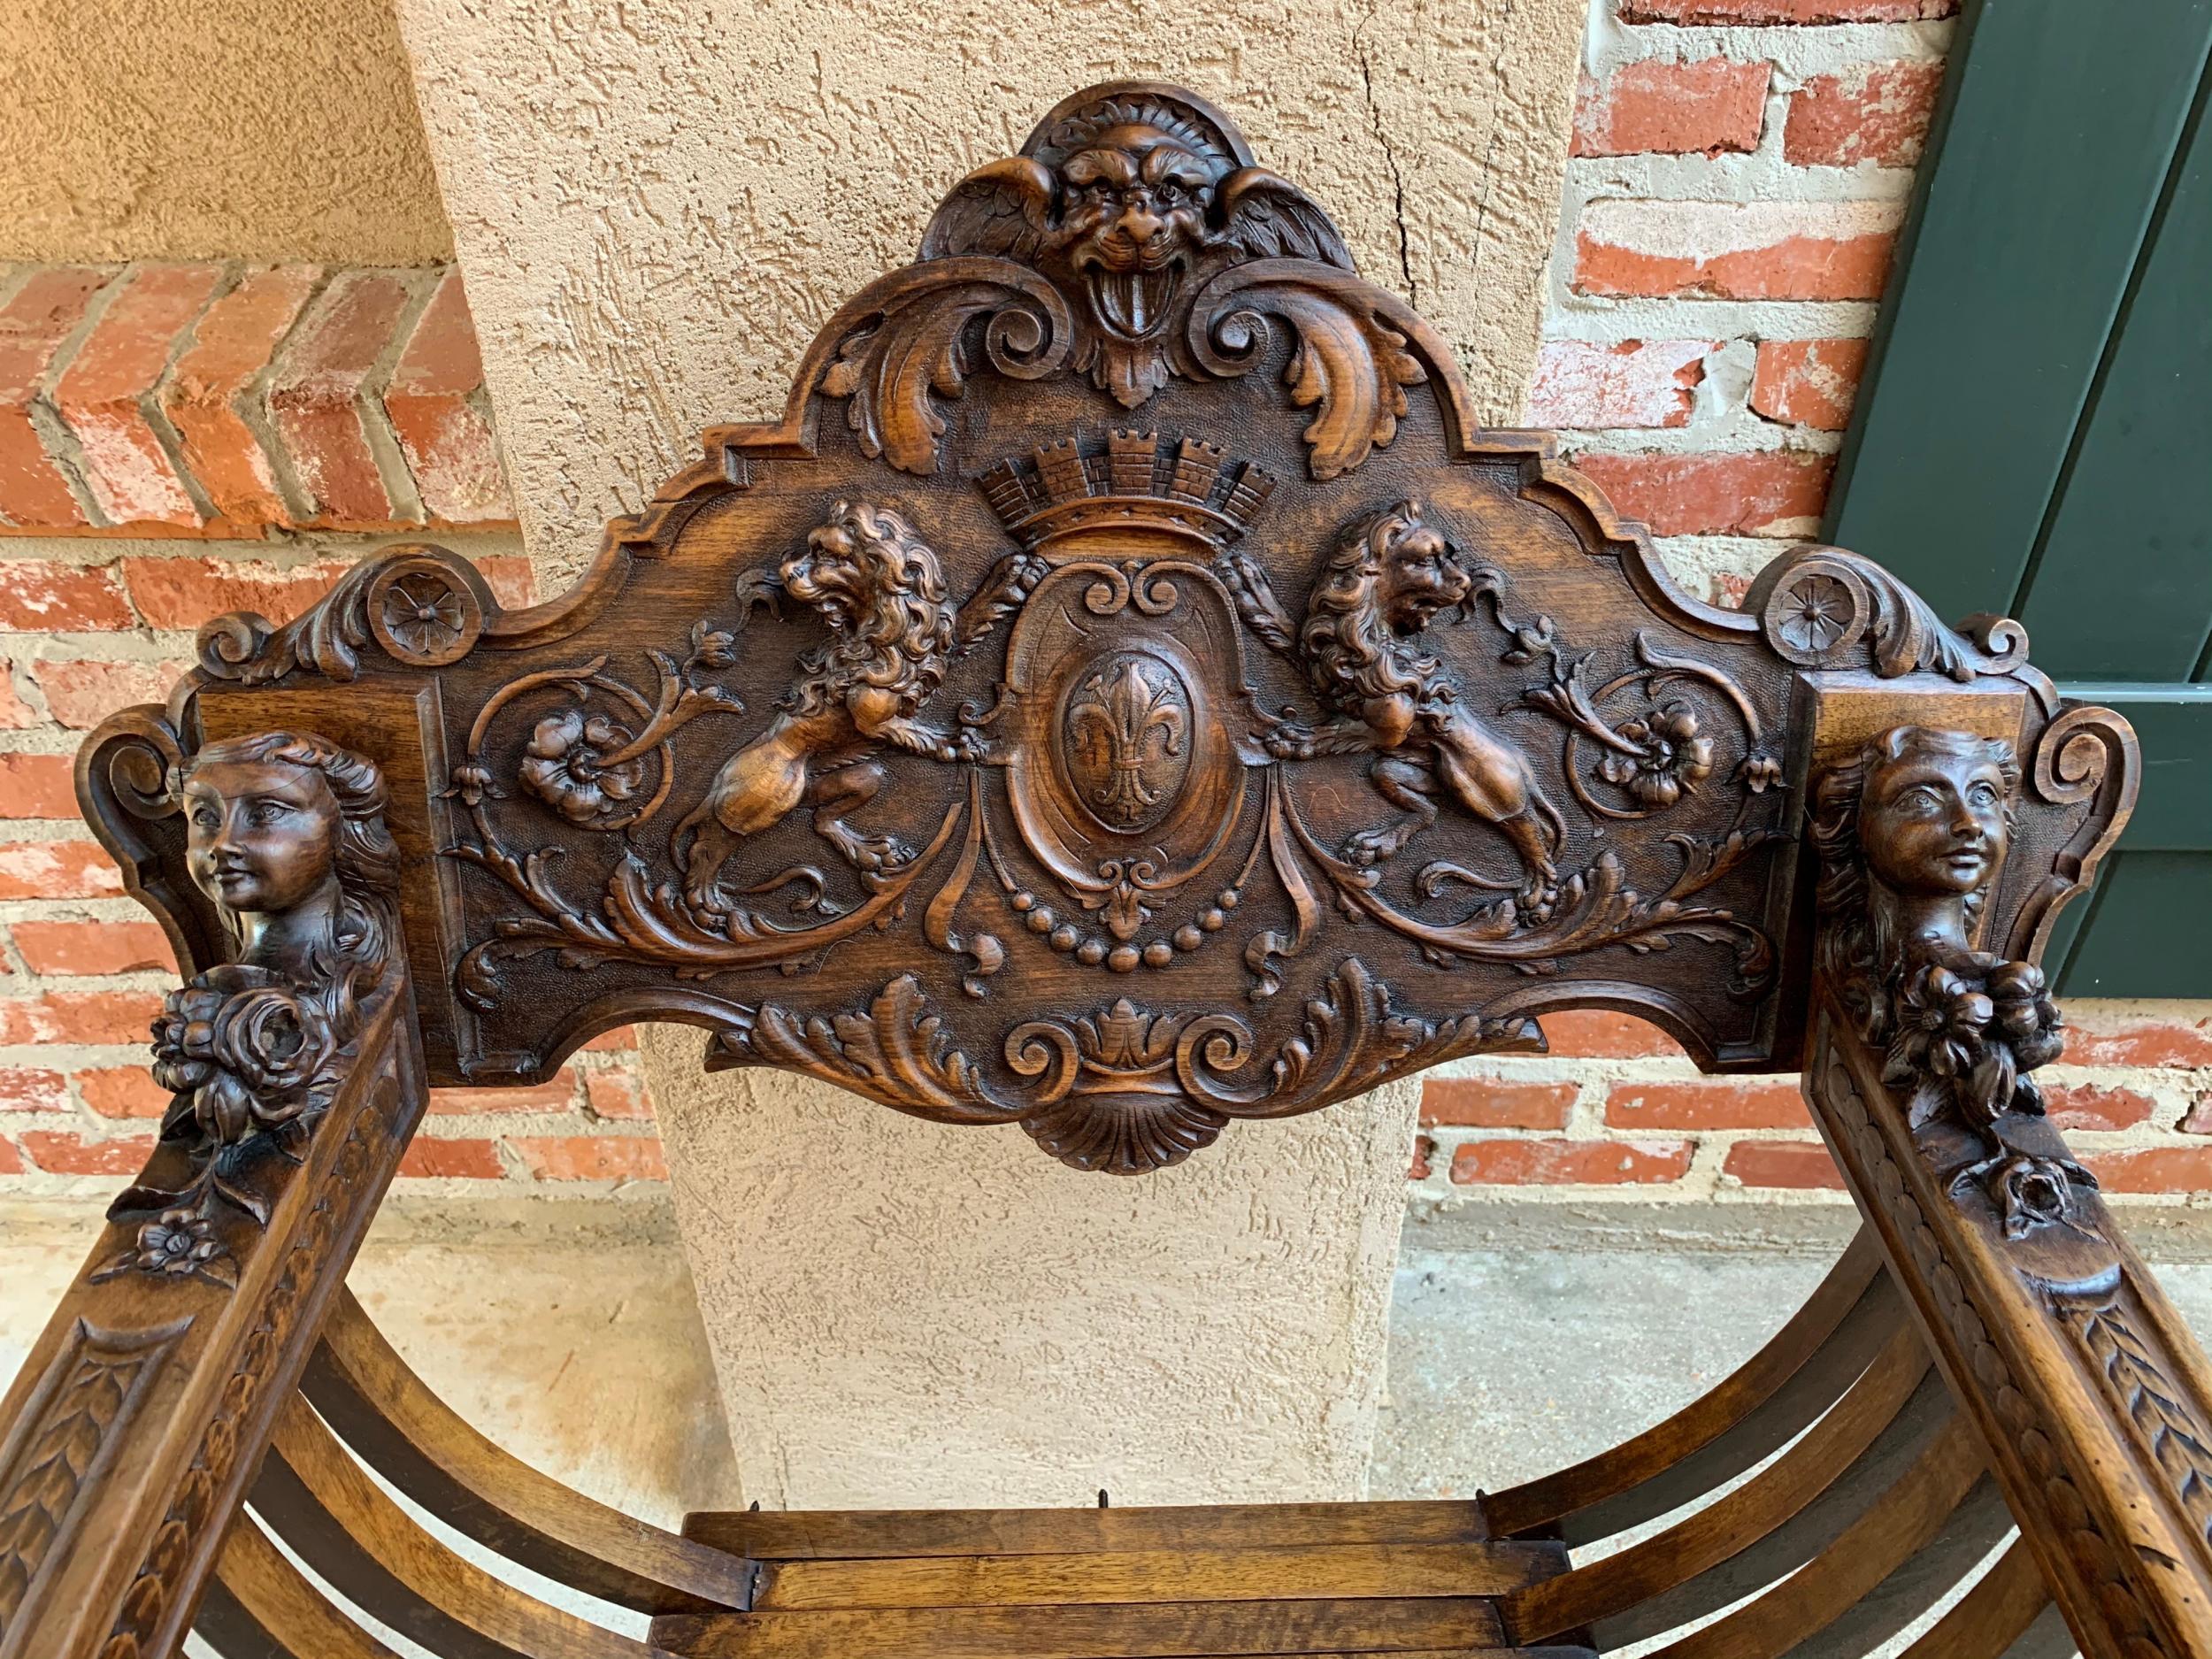 19th Century 19th century French Carved Walnut Dagobert Curule Chair Arm Throne Renaissance